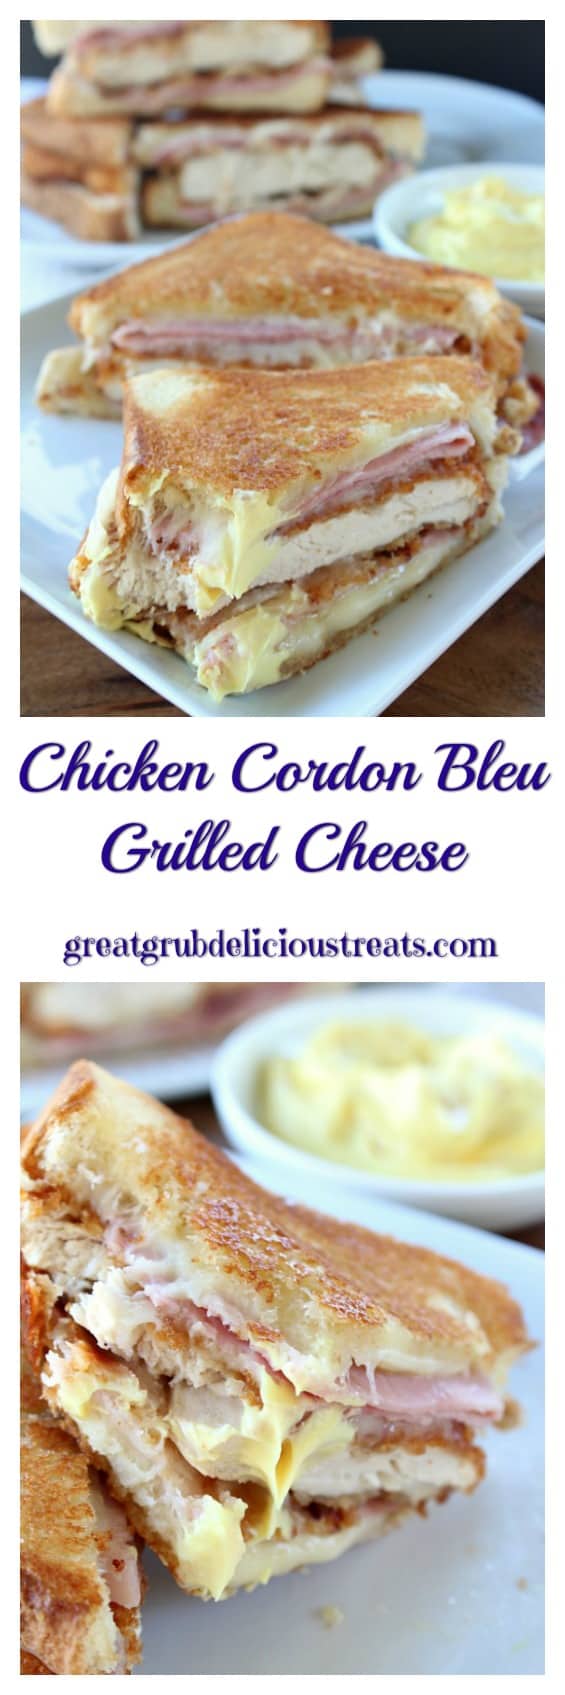 Chicken Cordon Bleu Grilled Cheese